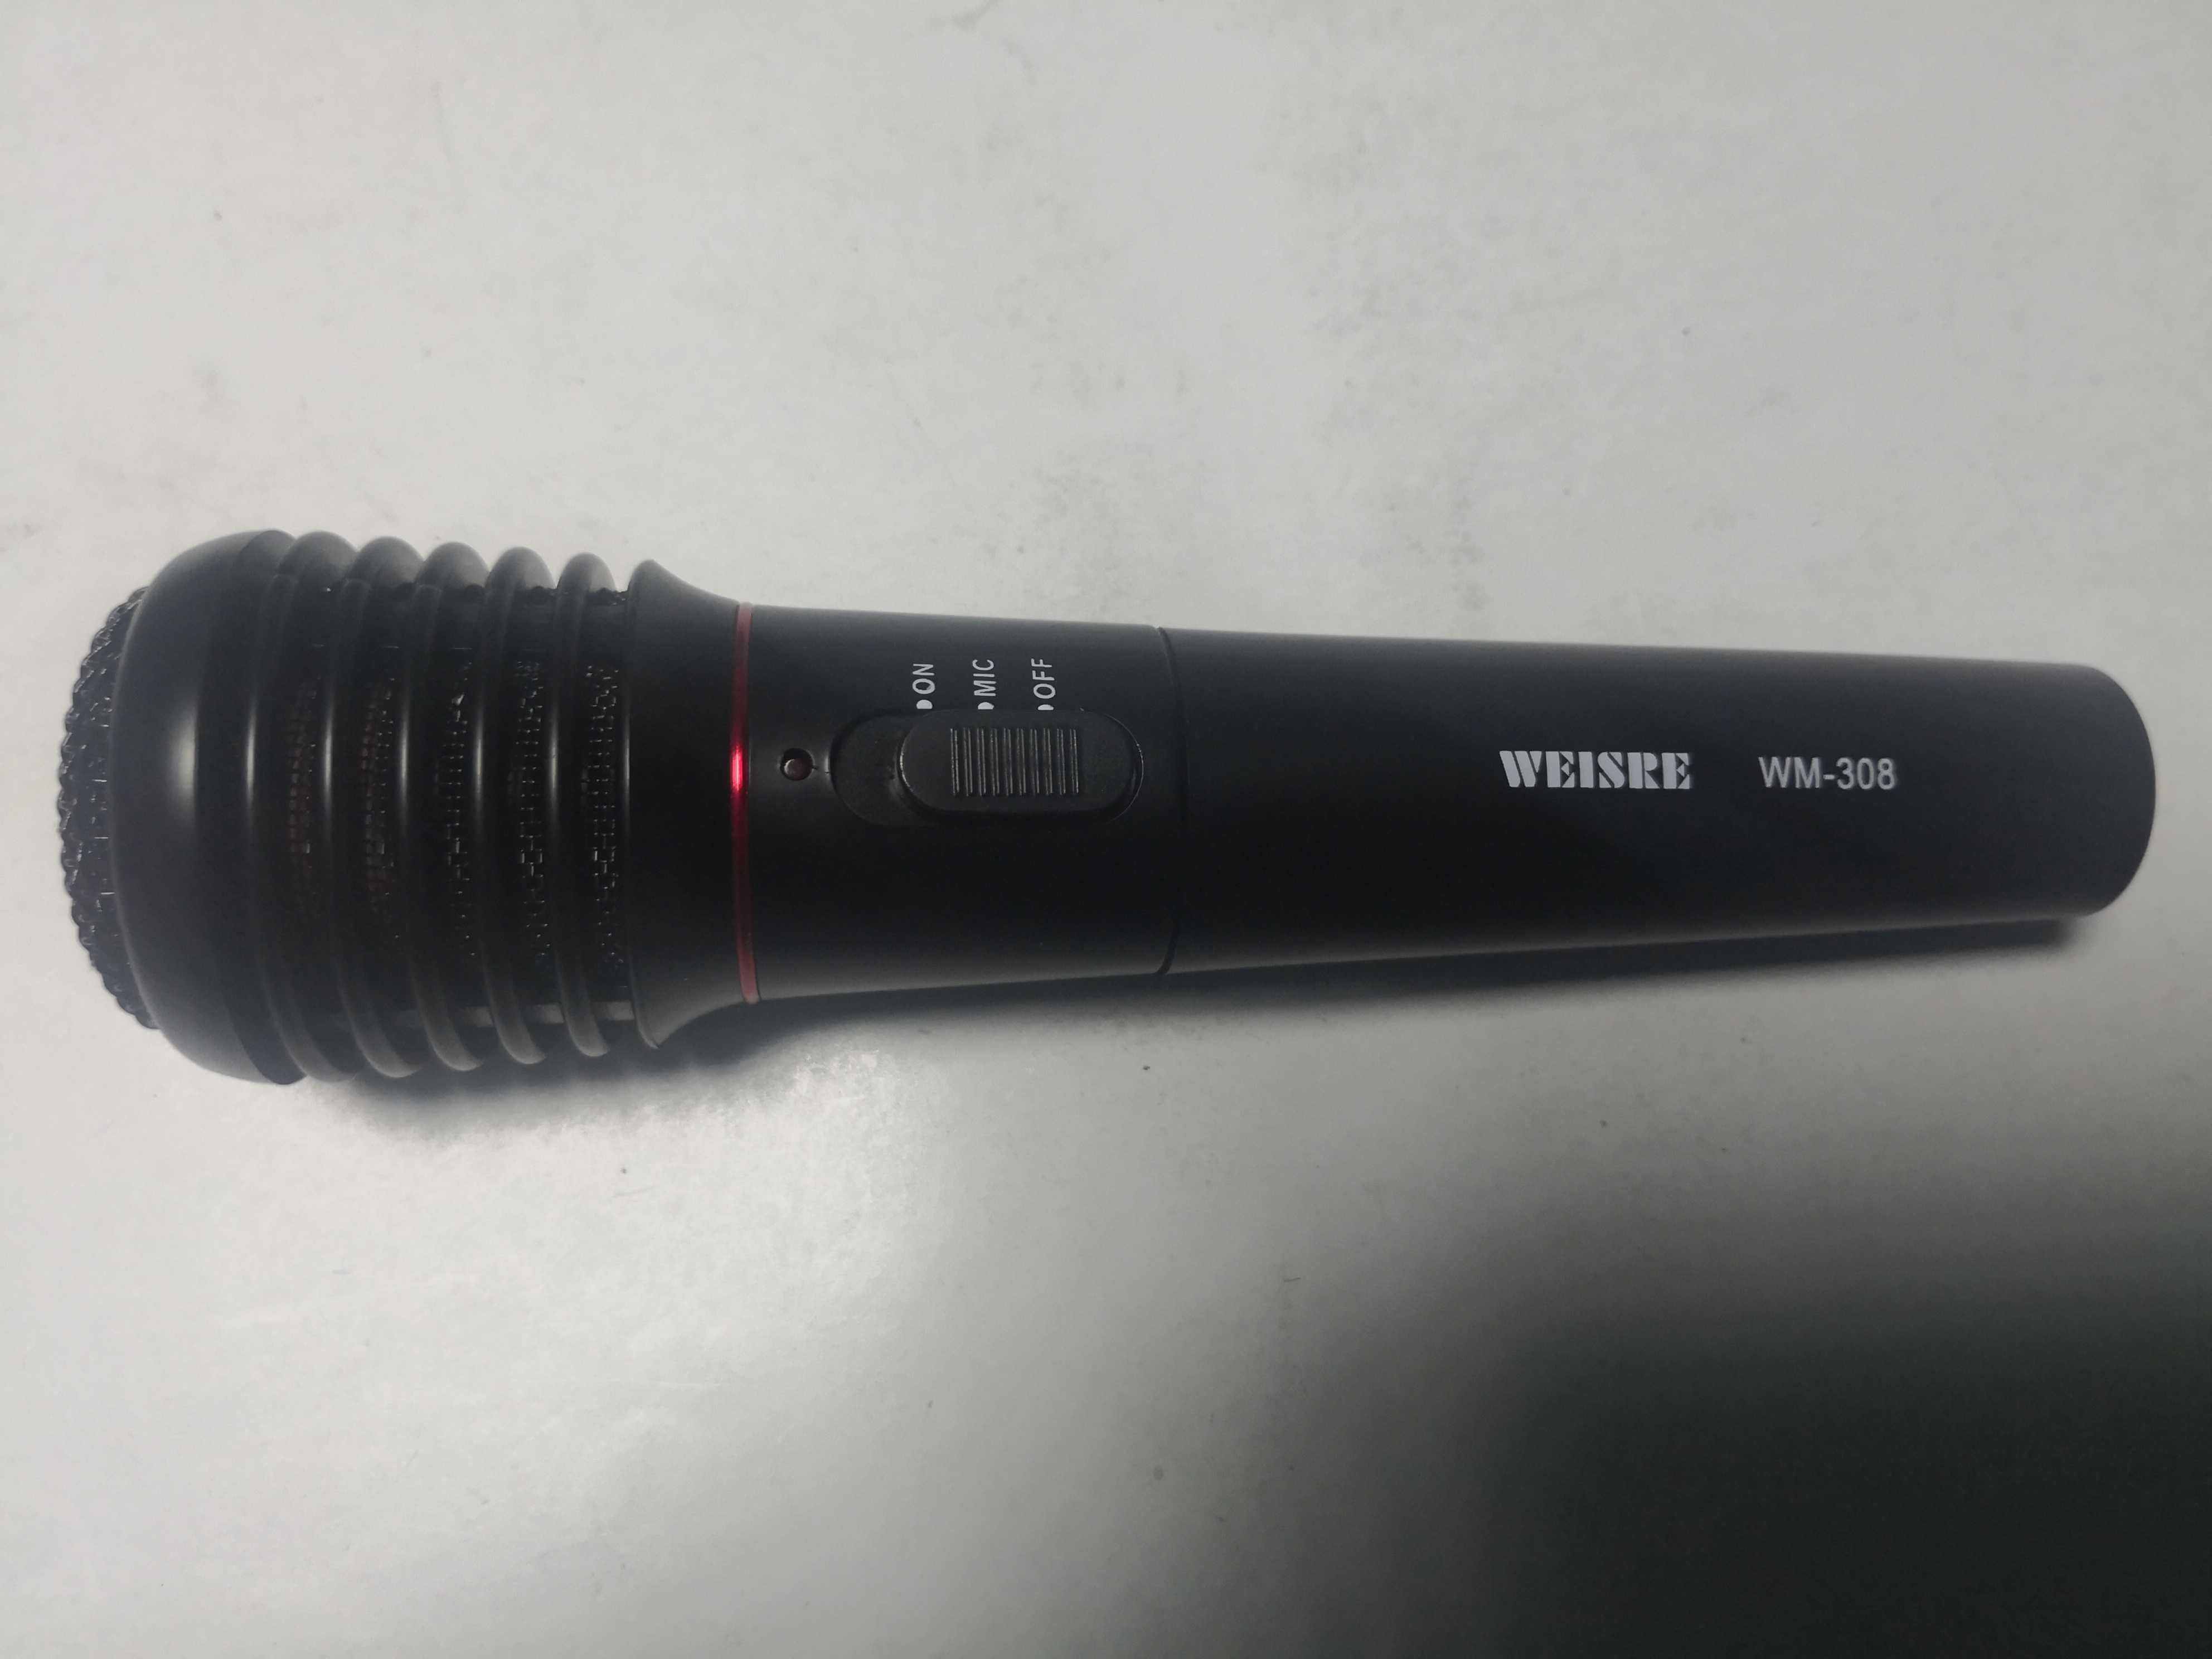 Microfon cu fir si receptor wi-fi